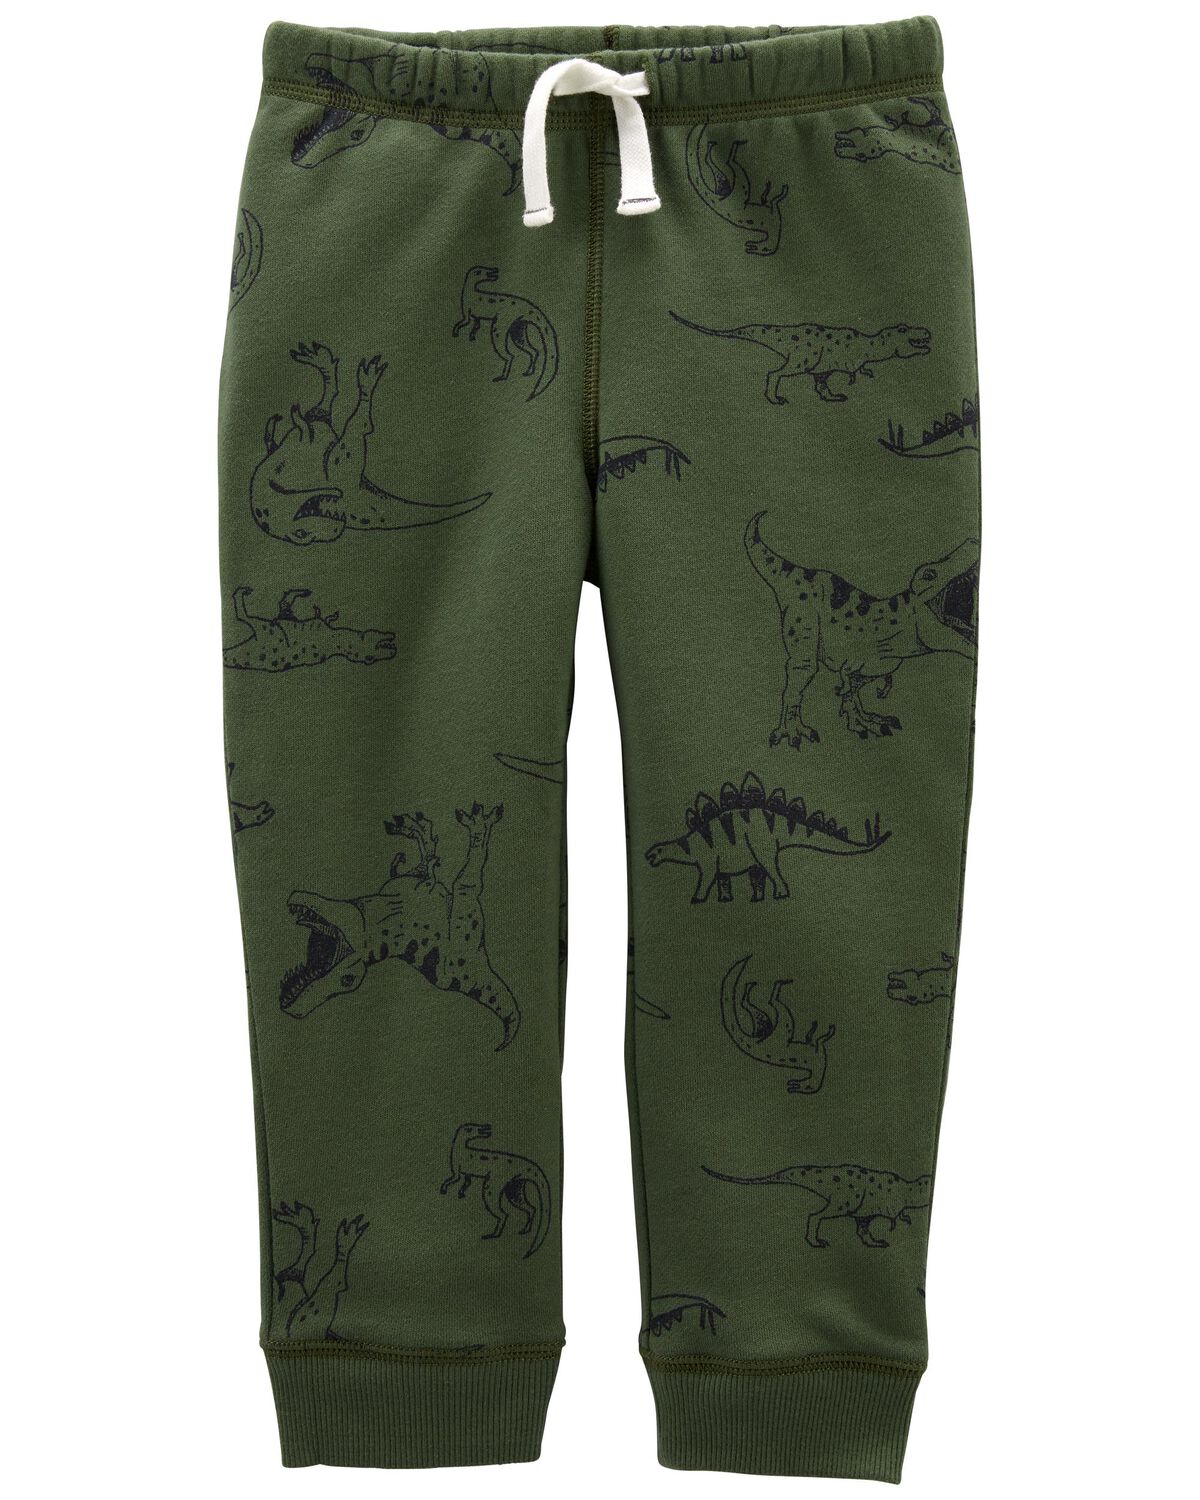 Green Toddler Pull-On Fleece Pants | carters.com